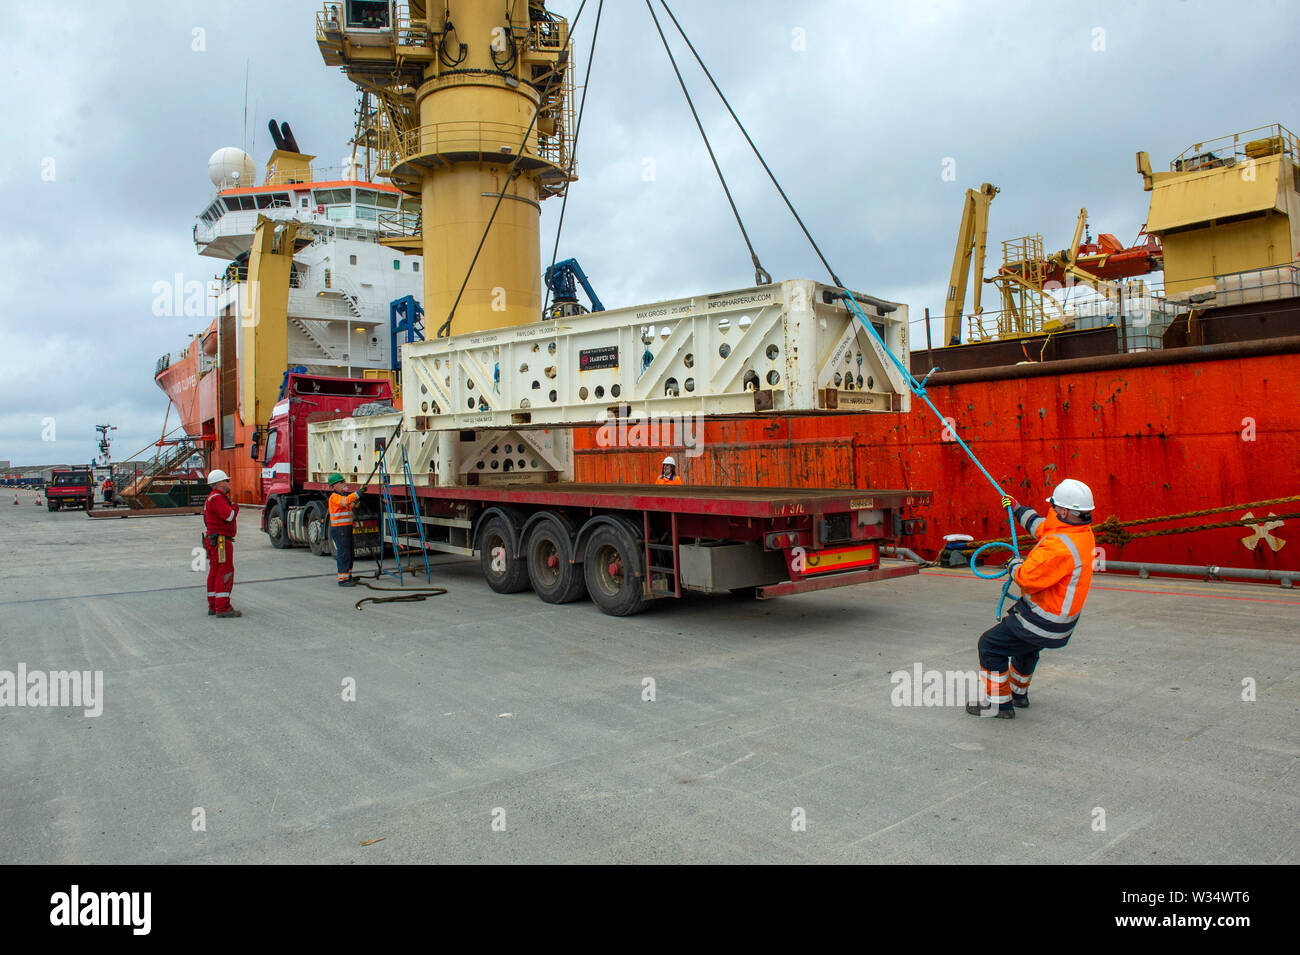 Normand Clipper entrega de la planta retirada del servicio del petróleo del mar del norte Campos de Lerwick Shetland Foto de stock